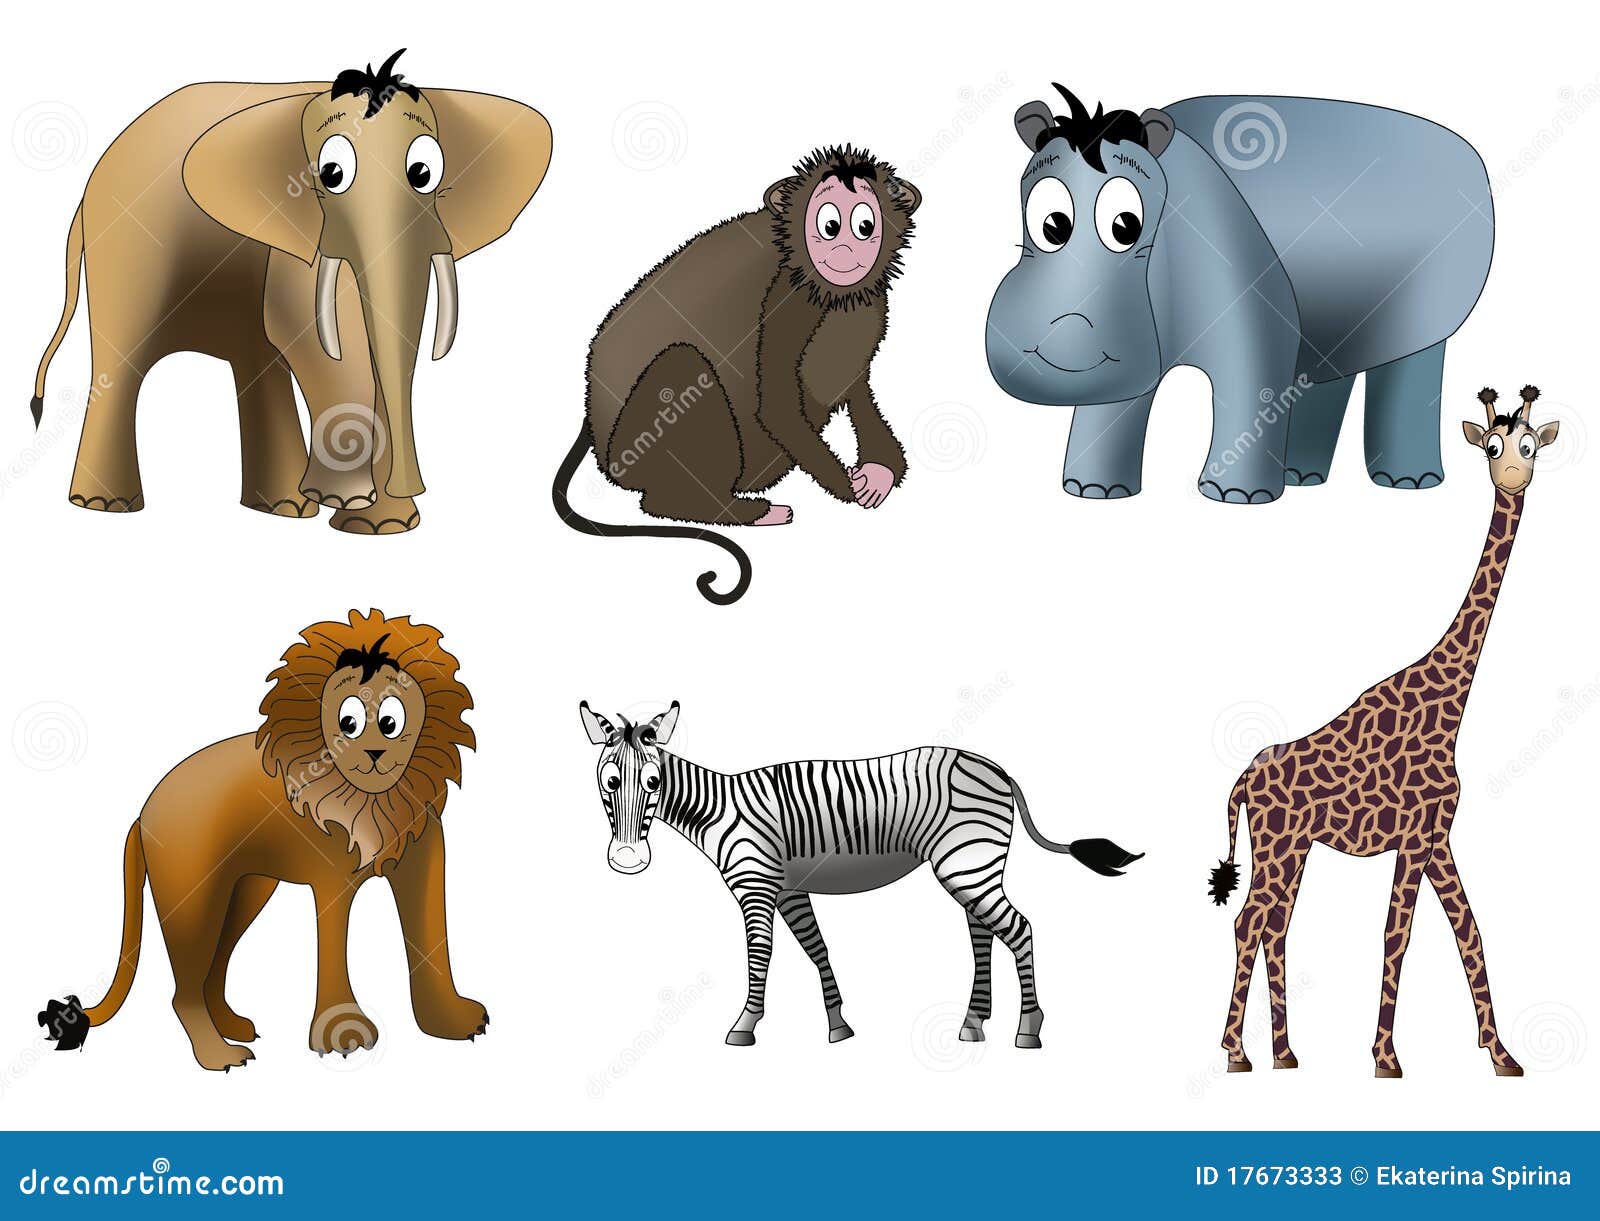 Тигр лев жираф слон. Слон Жираф Бегемот. Обезьяна, Жираф, Зебра, слон. Животные слон, Лев, Жираф. Слон, Жираф, Лев, обезьяна, крокодил ДОУ.